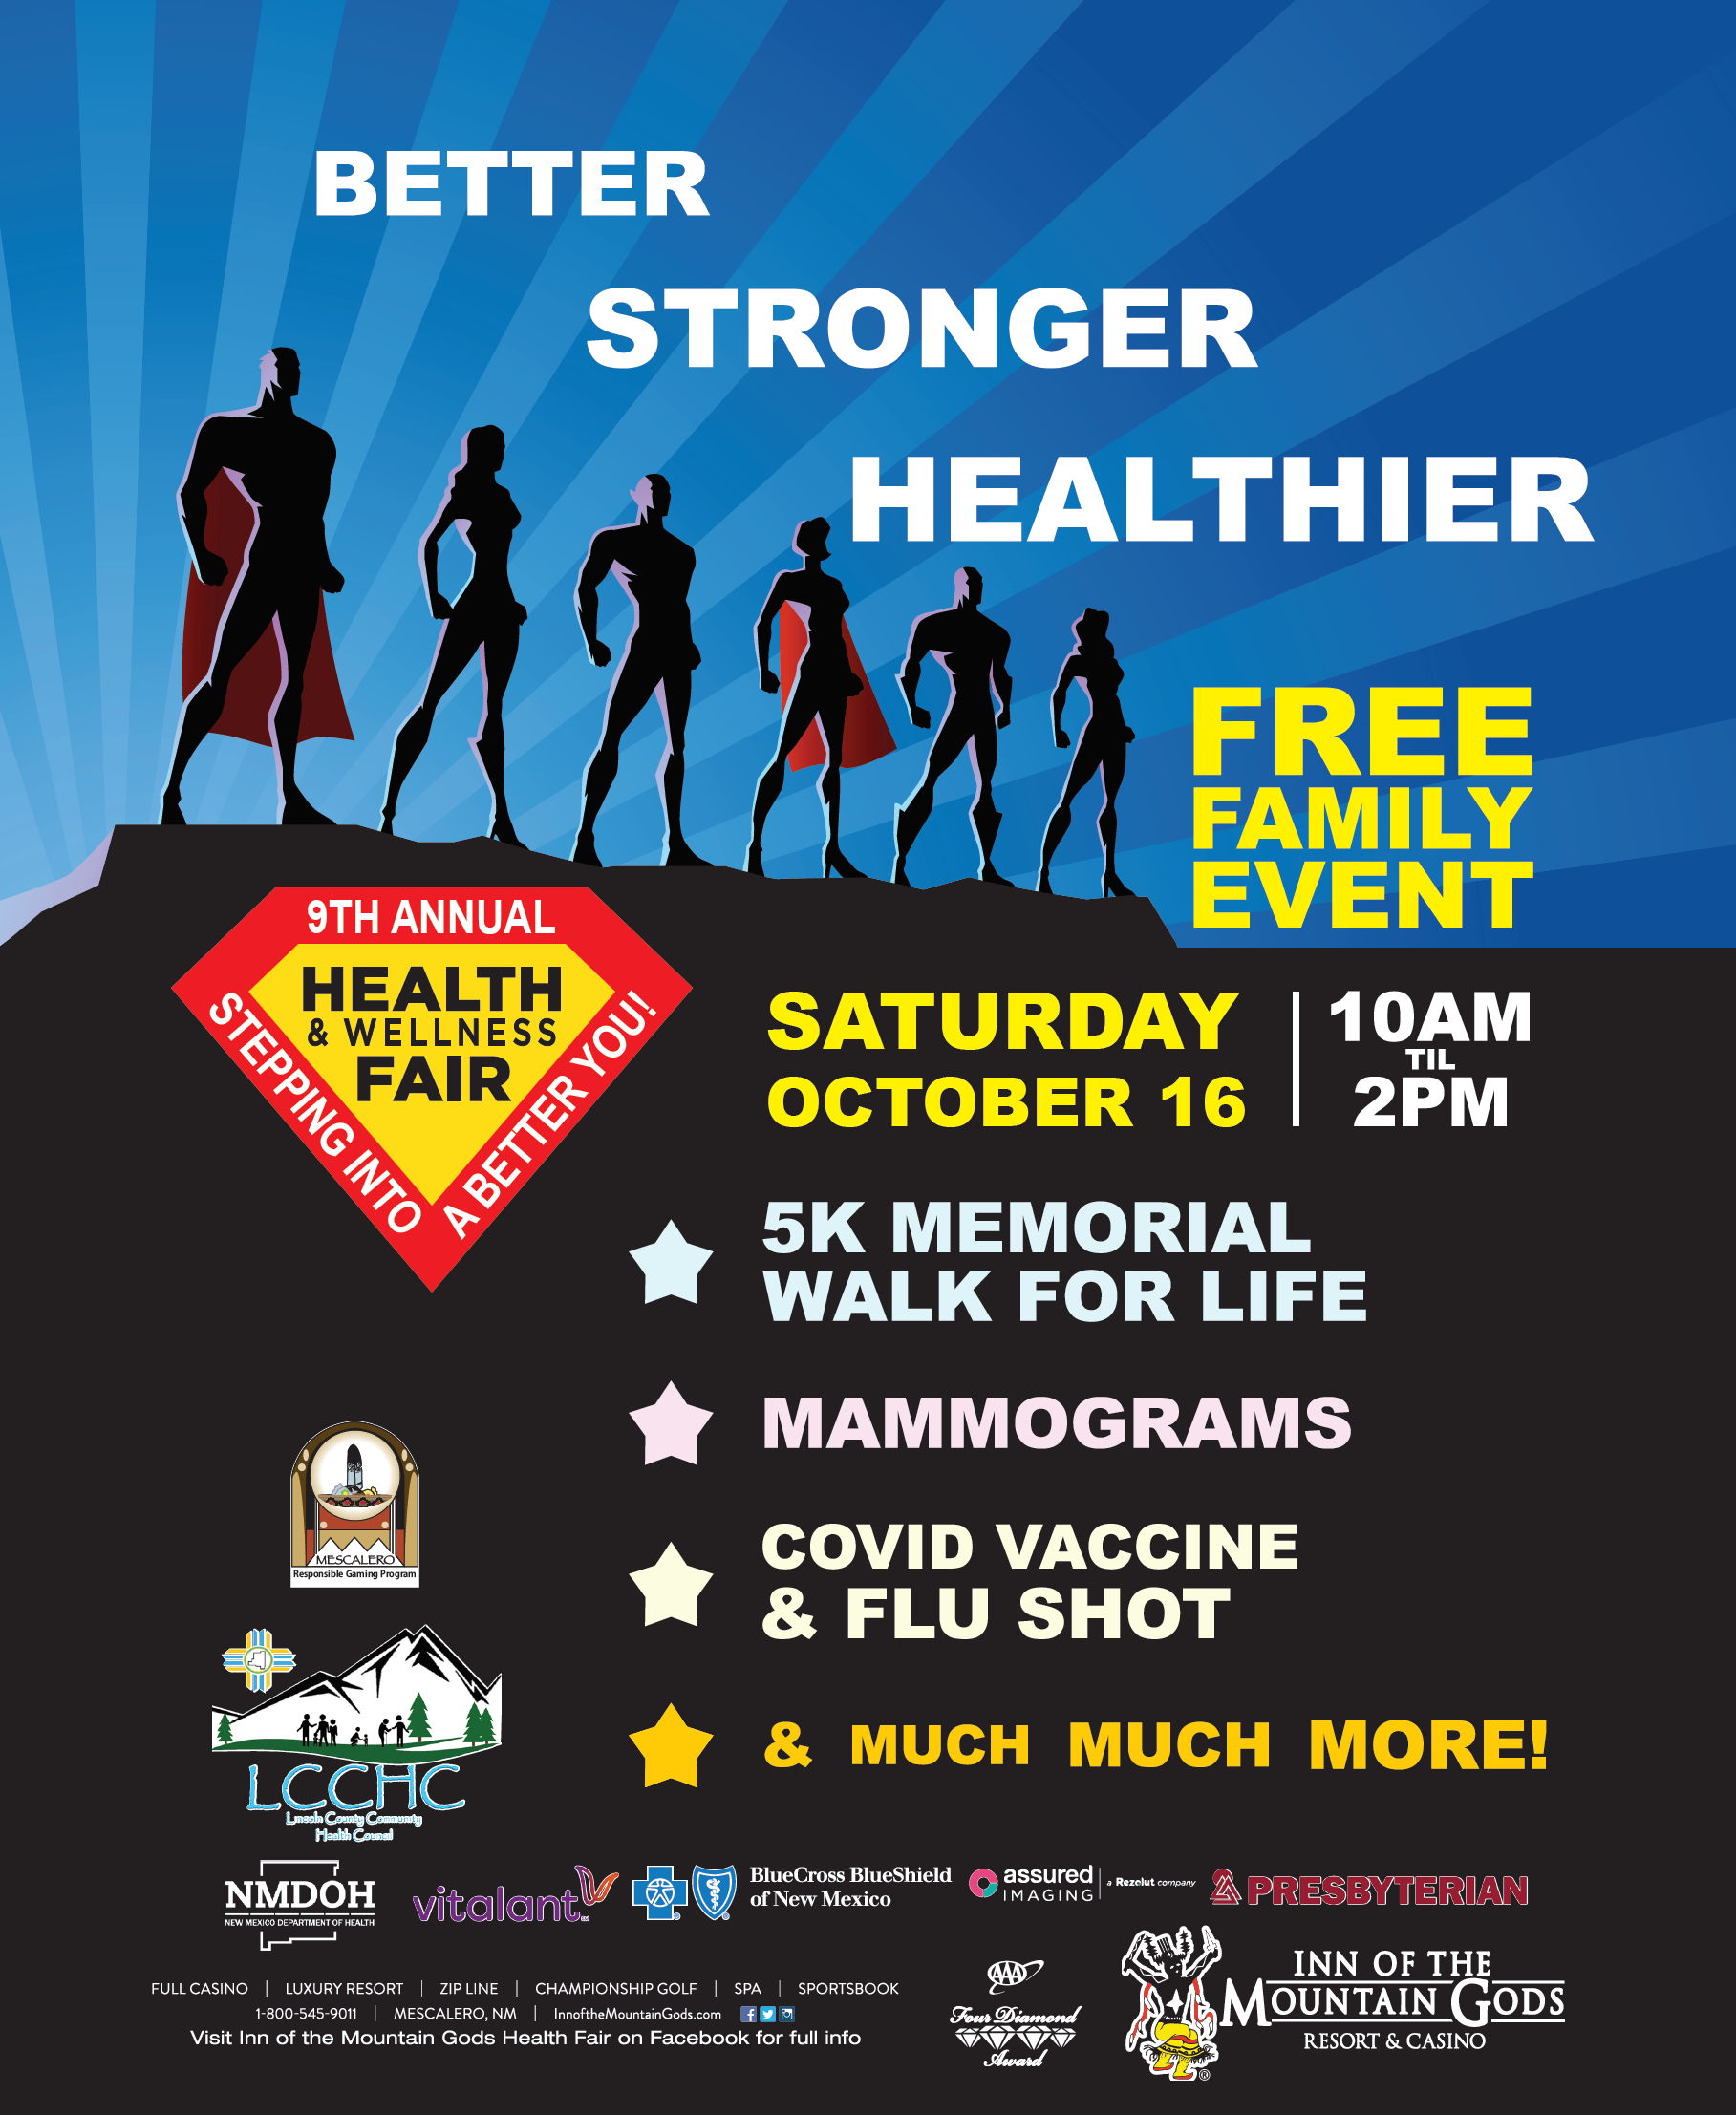 9th Annual Health & Wellness Fair Official Website of the Mescalero